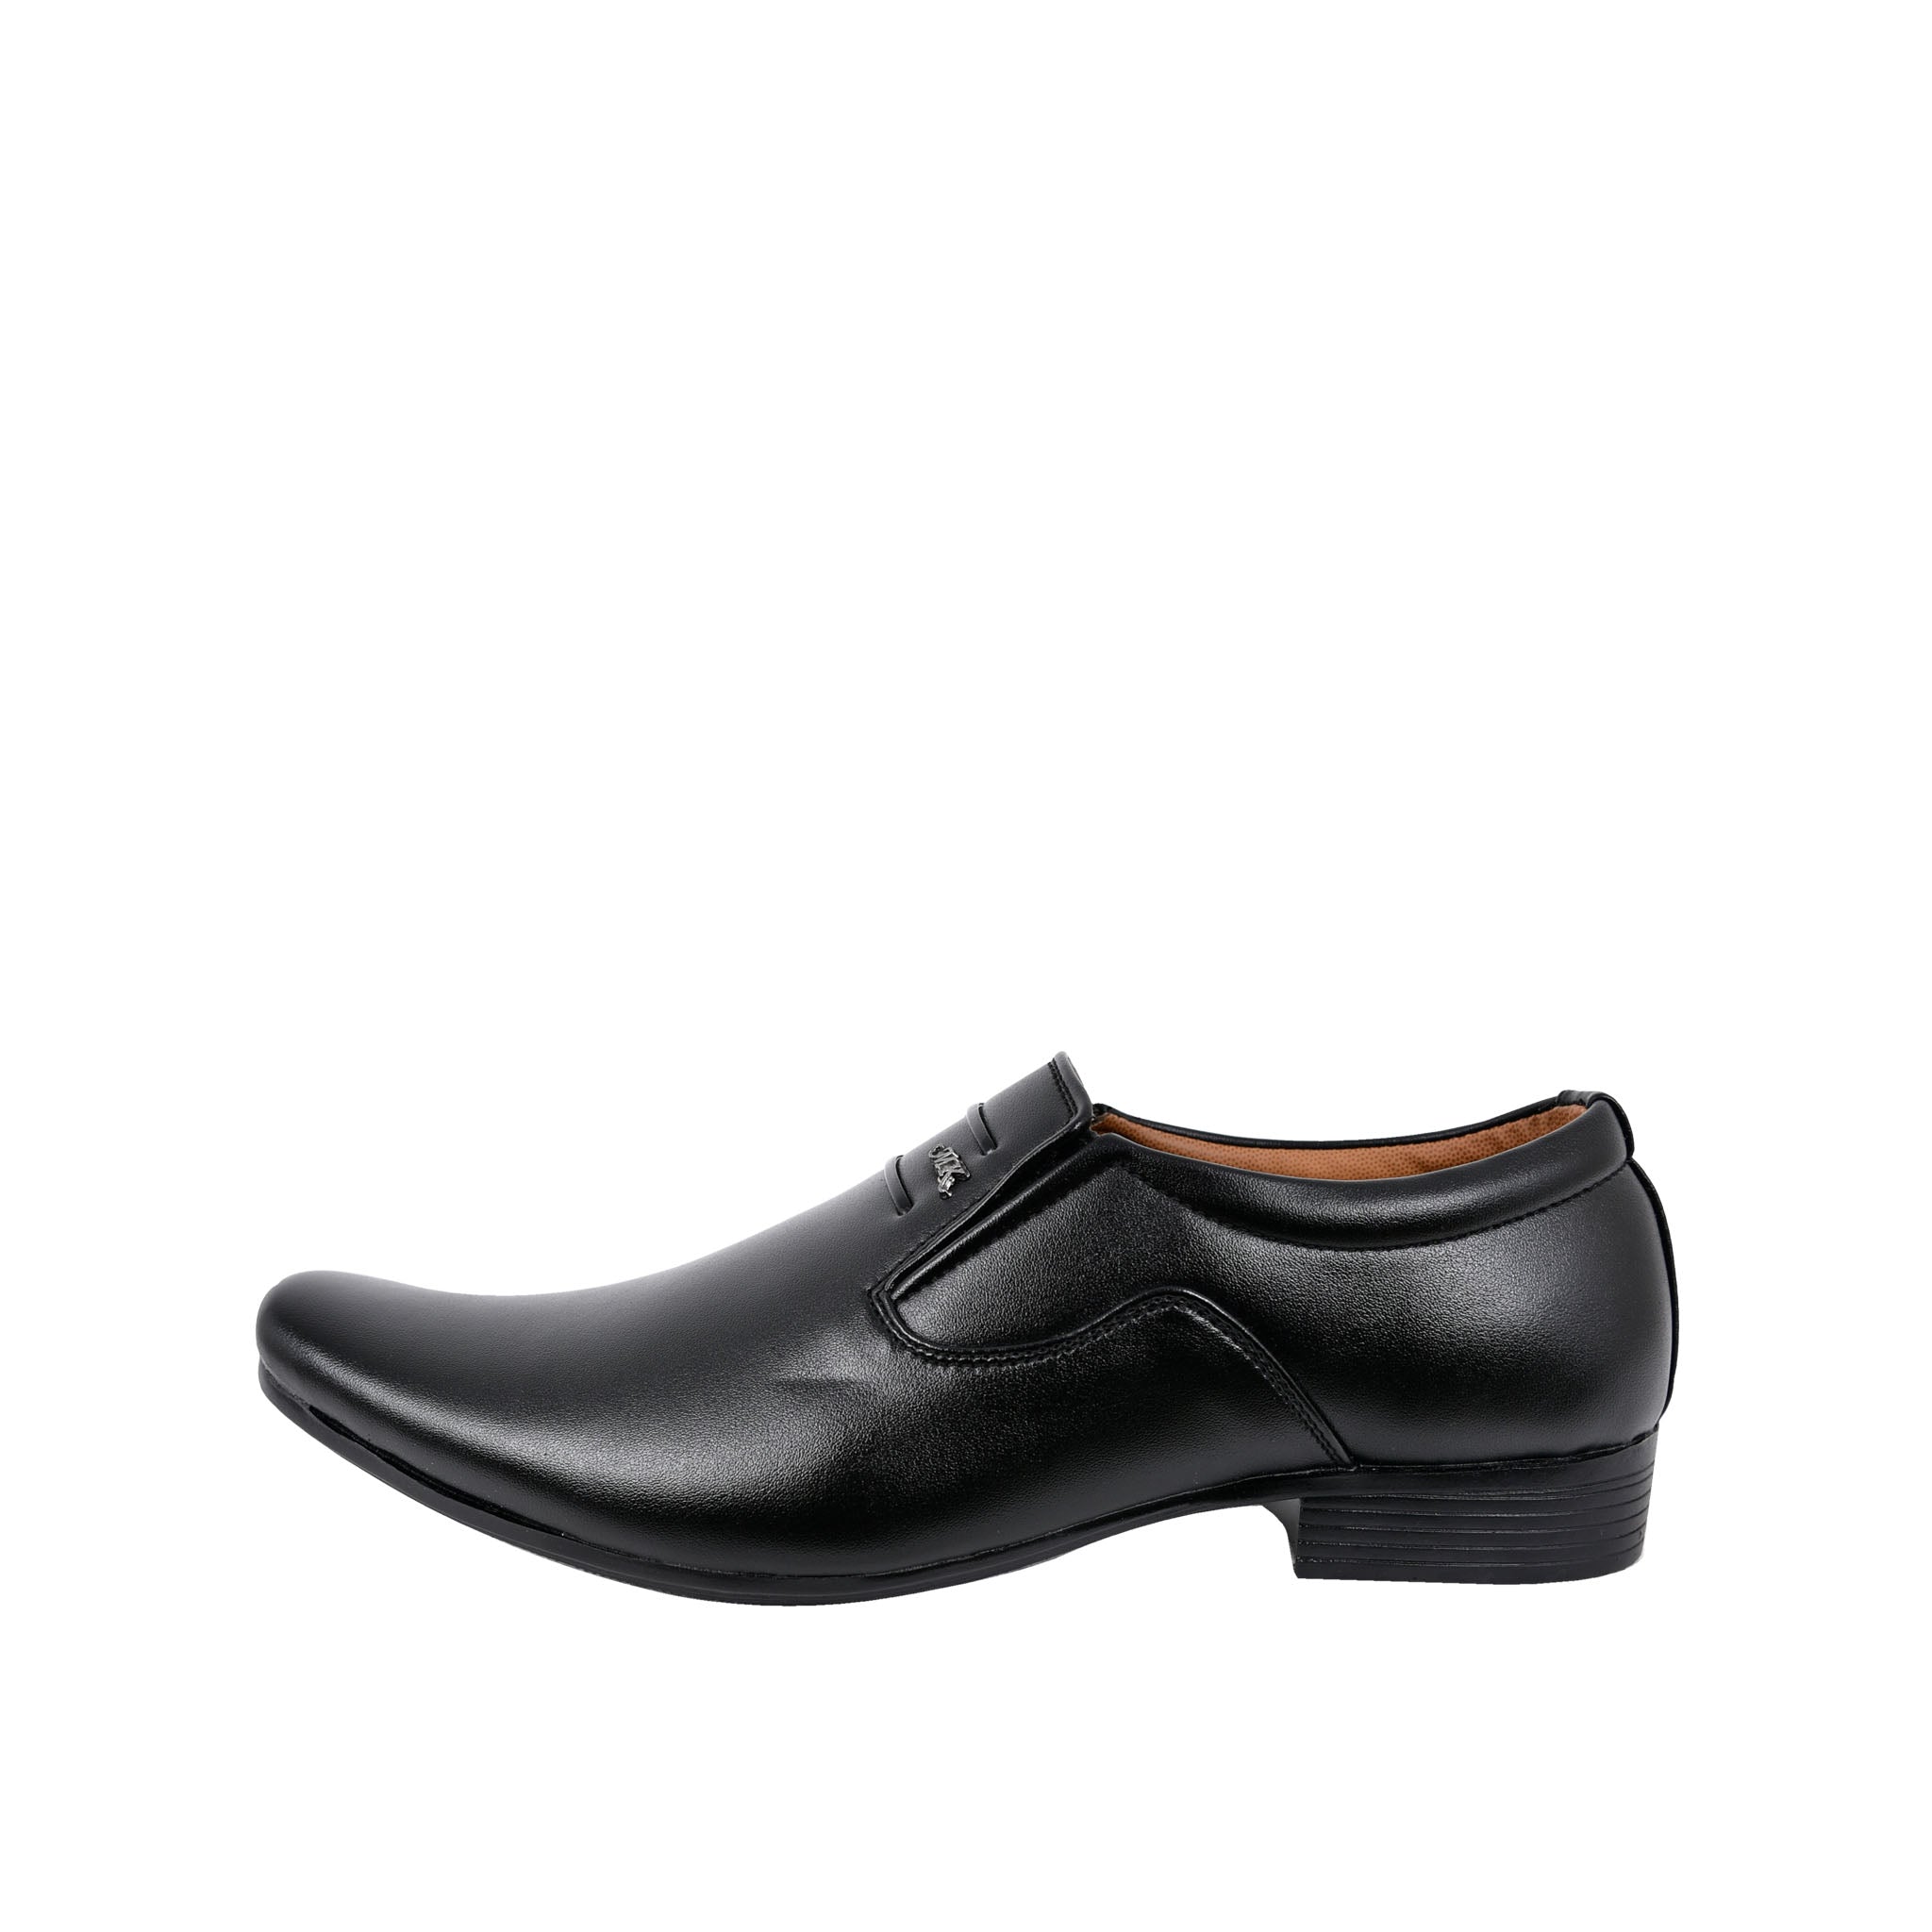 Shop Mens Slip-On Formal Shoes online in Dubai and UAE